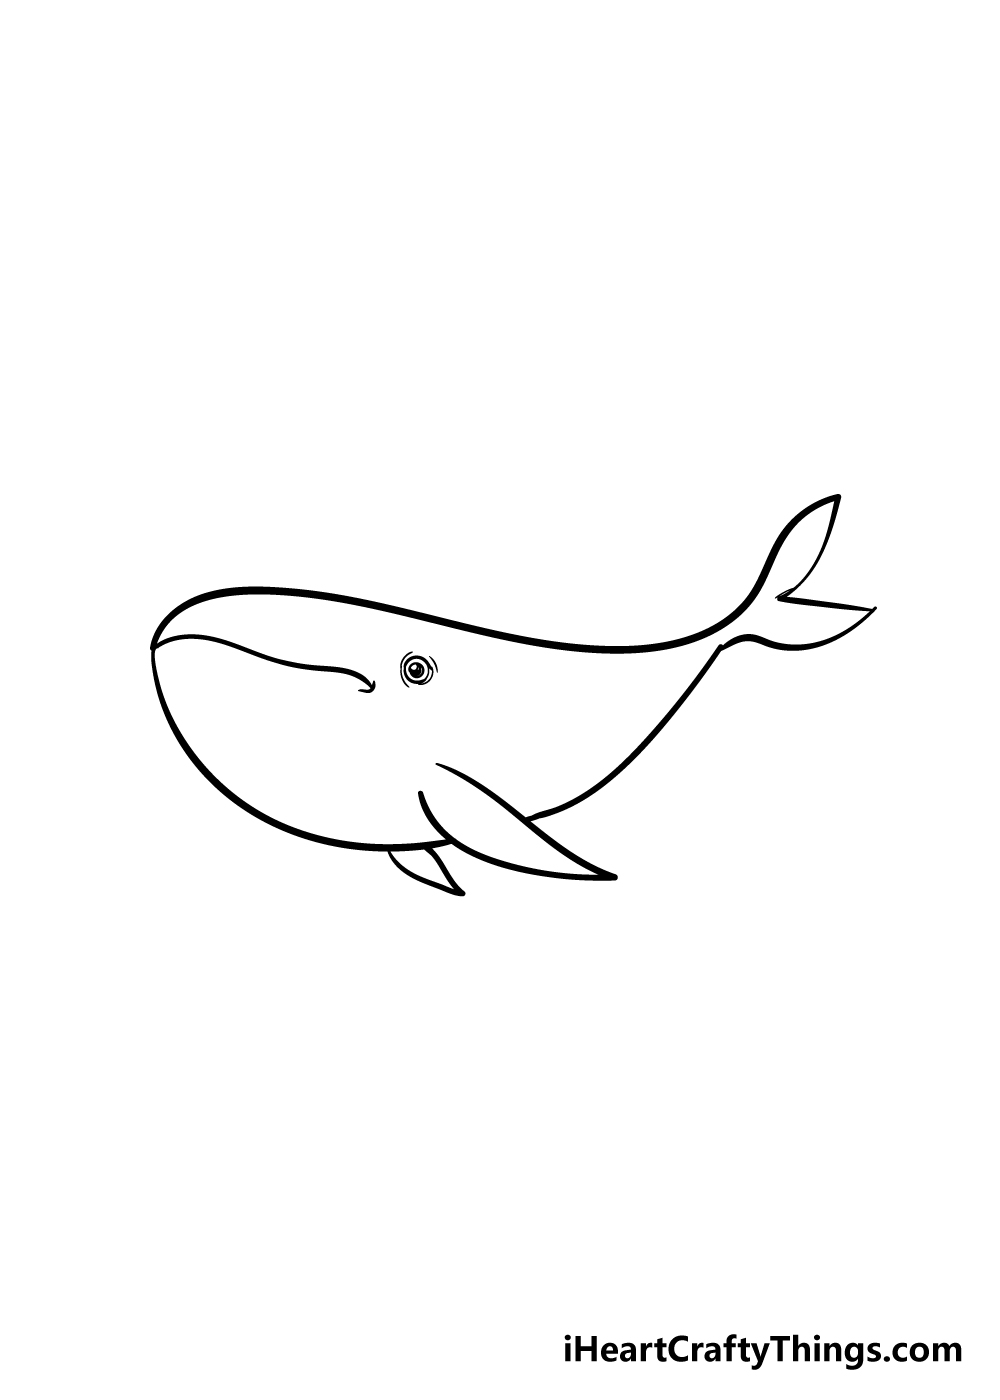 vẽ cá voi bước 4